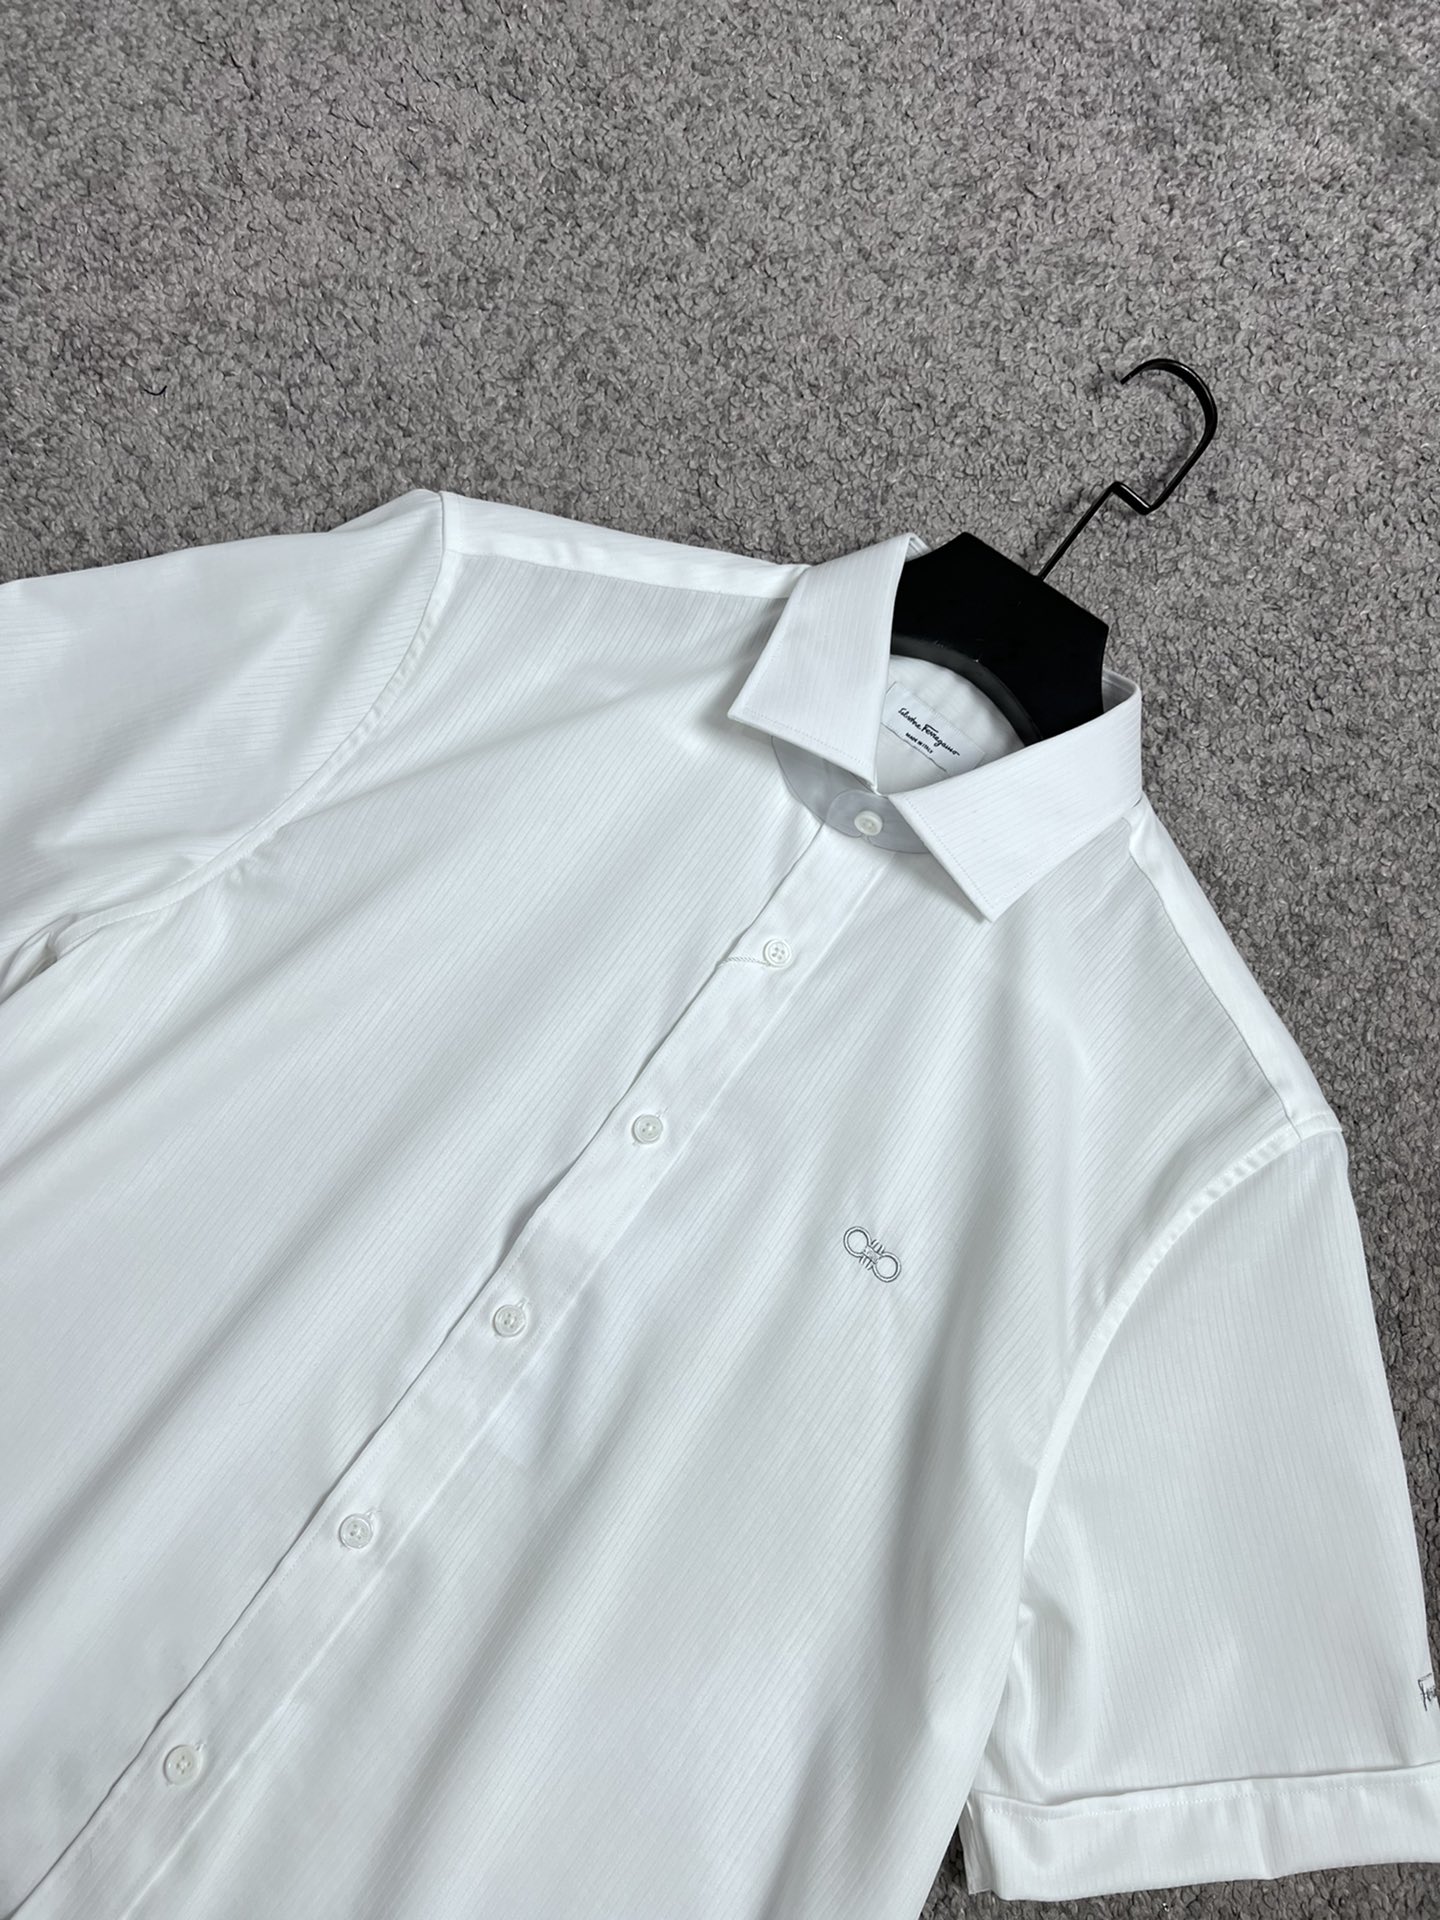 Fe菲拉格慕24SS春夏新款短袖衬衫商务休闲简约百搭高端系列黑色白色S,M,L,XL,XXL